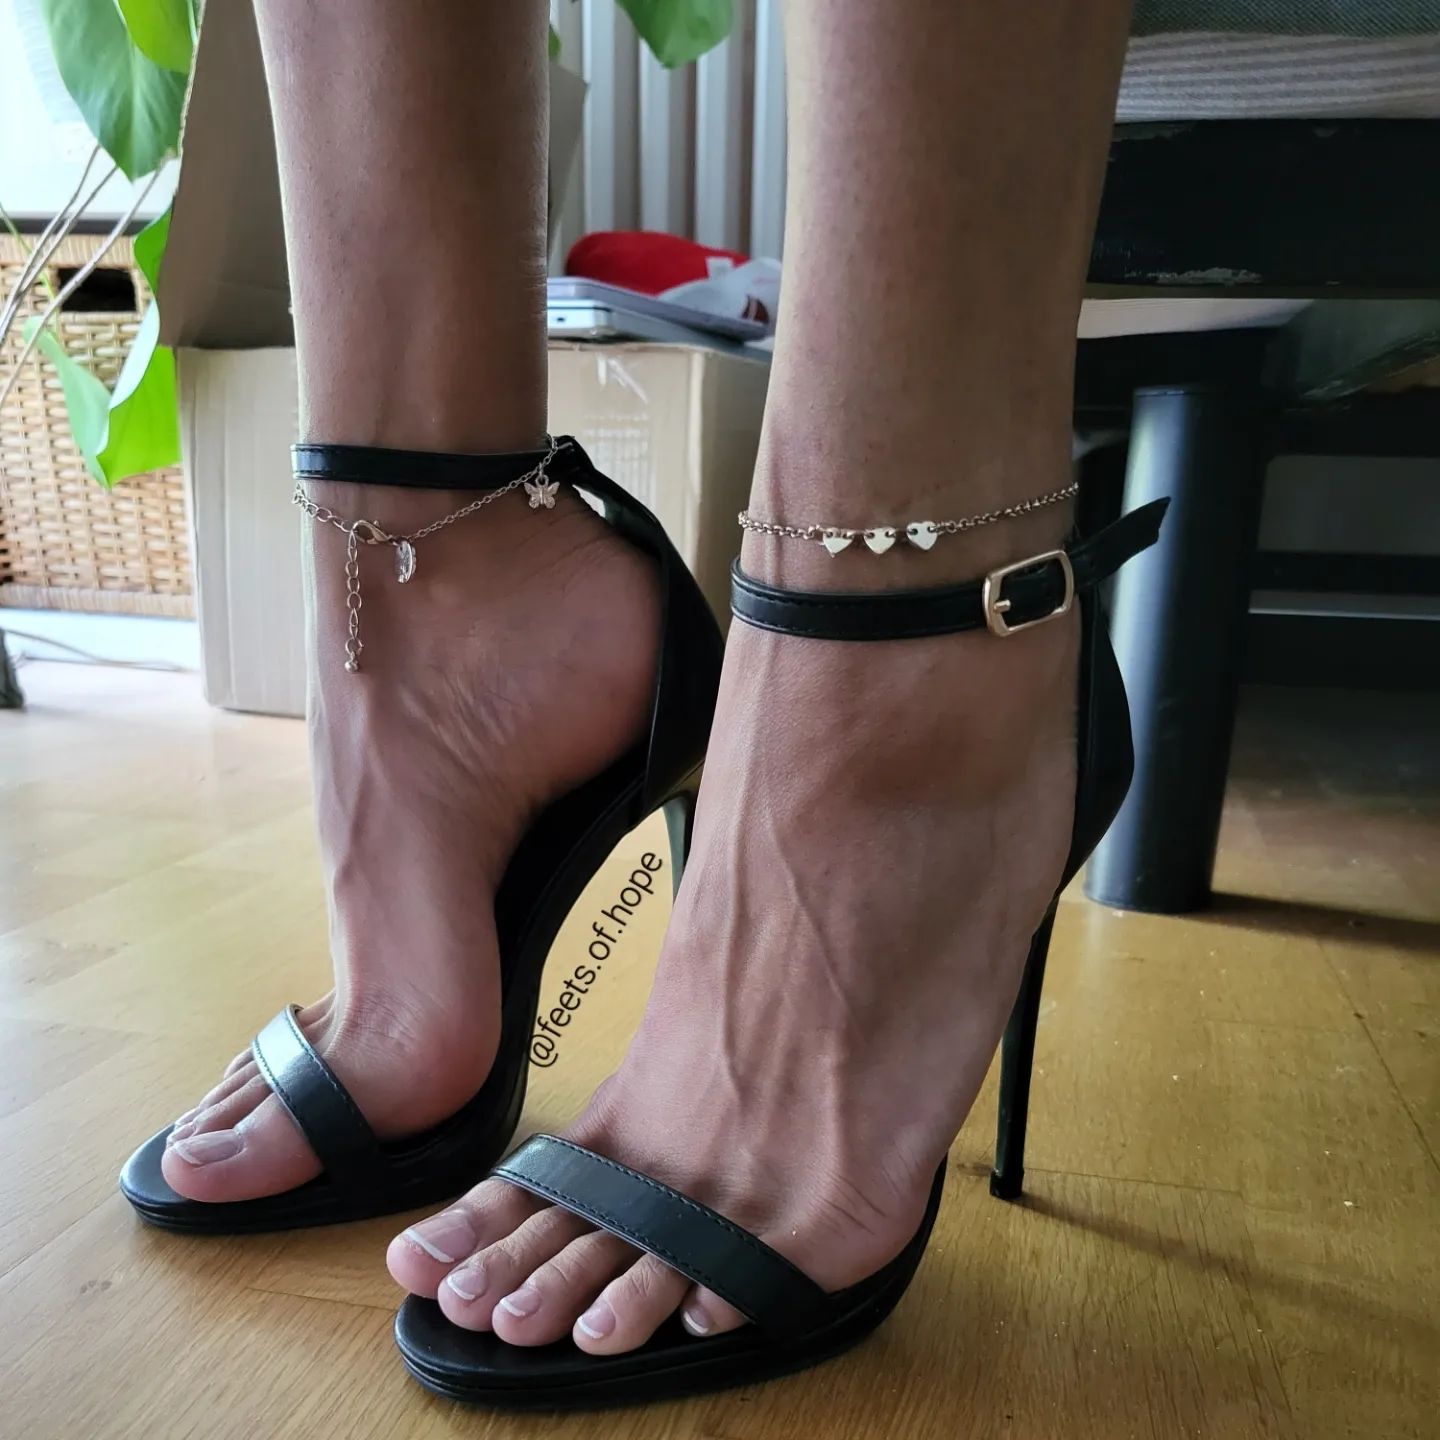 Trying something new✨️
#highheels #feetsofhope #pedicure
📸@germanfeet.girls3.0 ❤️